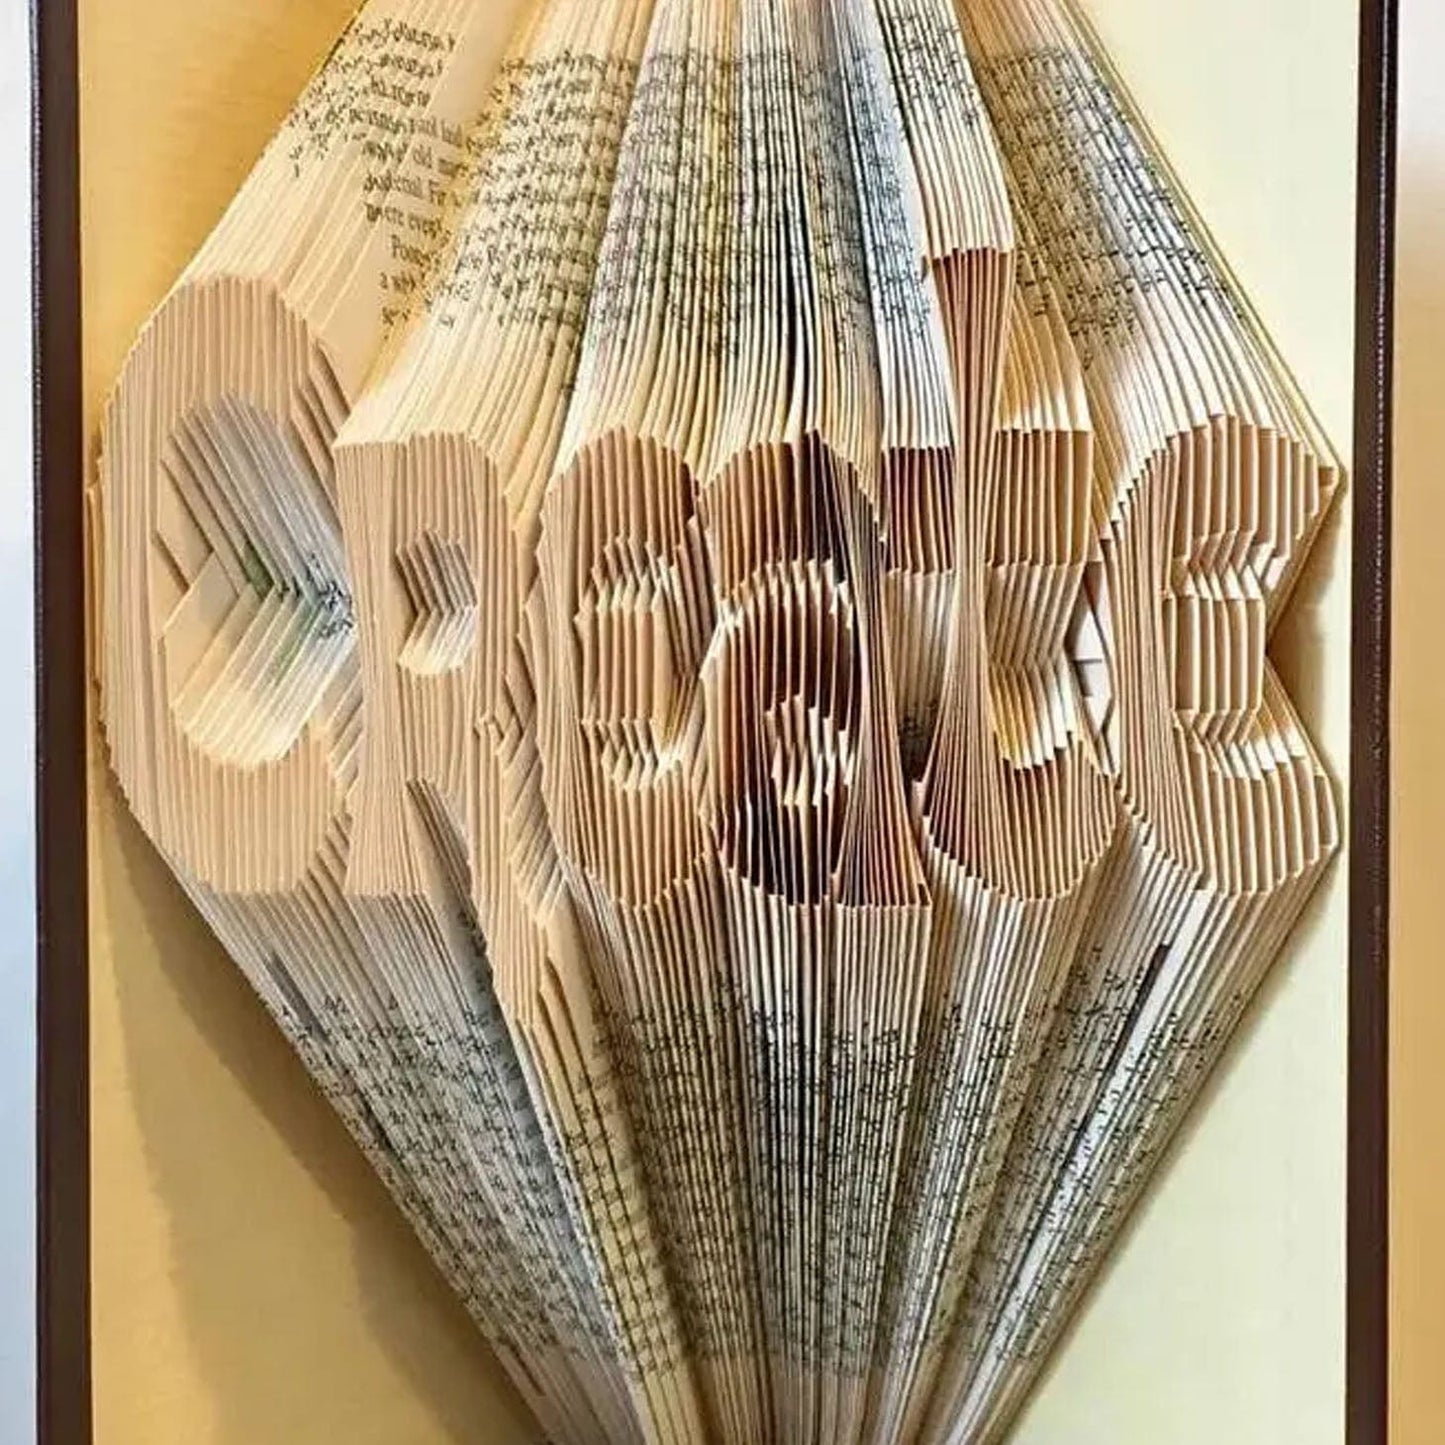 Folded Book Art - Create